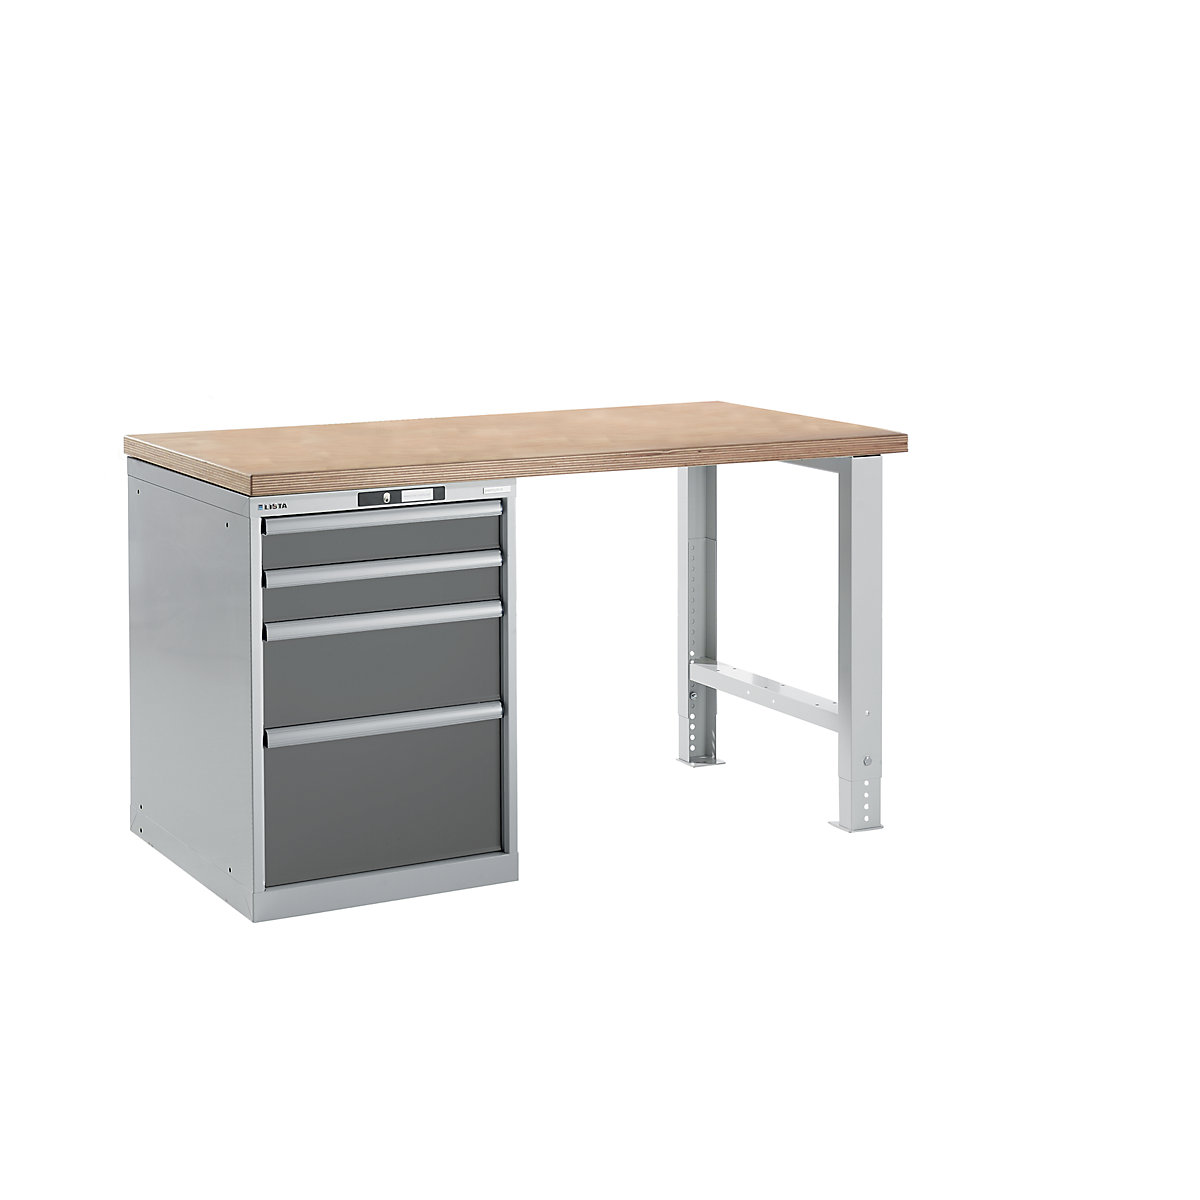 Modular workbench – LISTA, height 840 mm, pedestal drawer unit, 4 drawers, metallic grey, table width 1500 mm-13